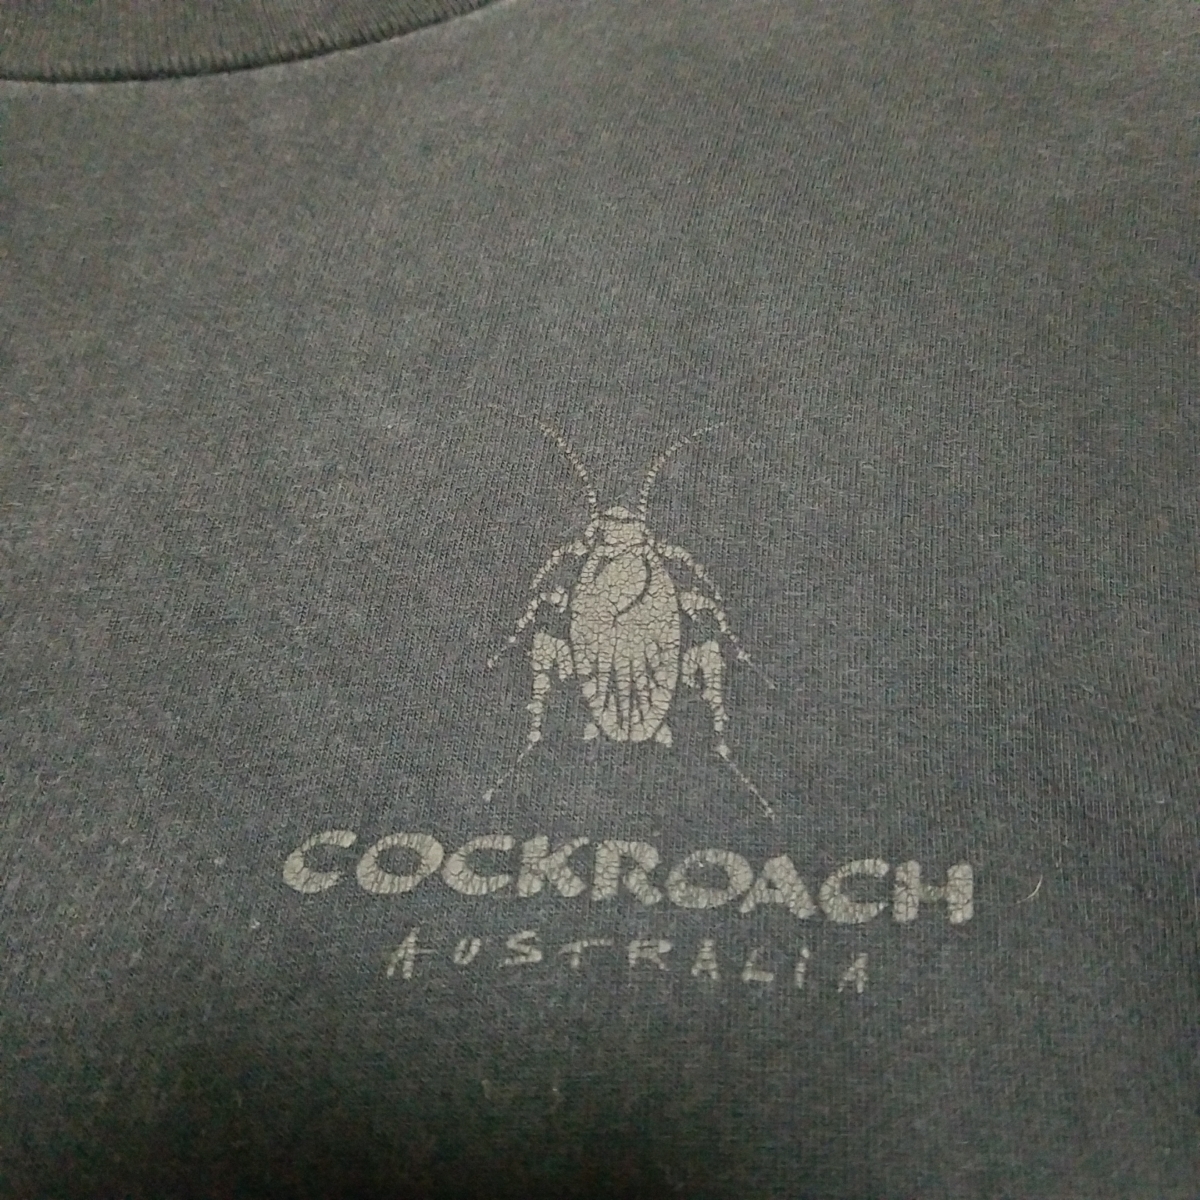 cockroach футболка размер L кок low chi скейтборд Vintage Австралия Usa производства oneita